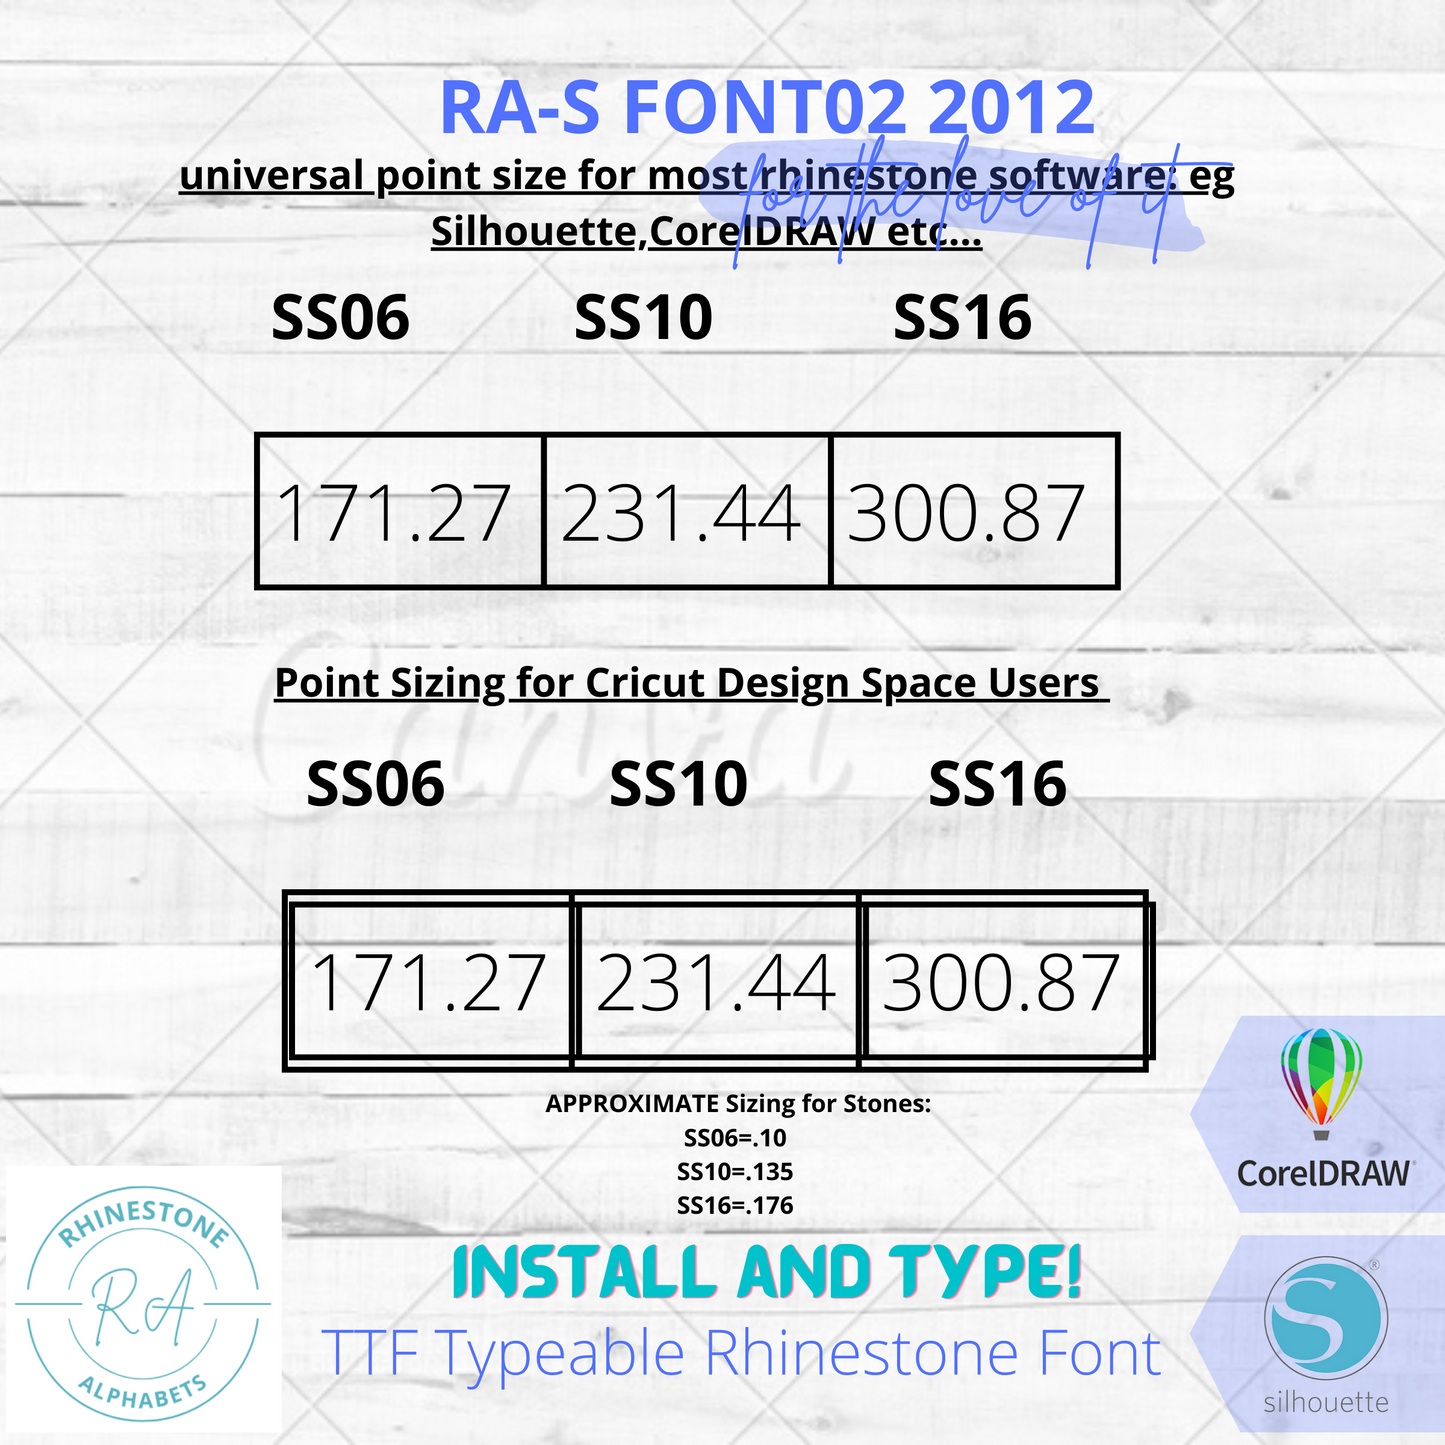 RA-S Font02 2012 a TTF typeable Rhinestone Font.  Combo 2 color